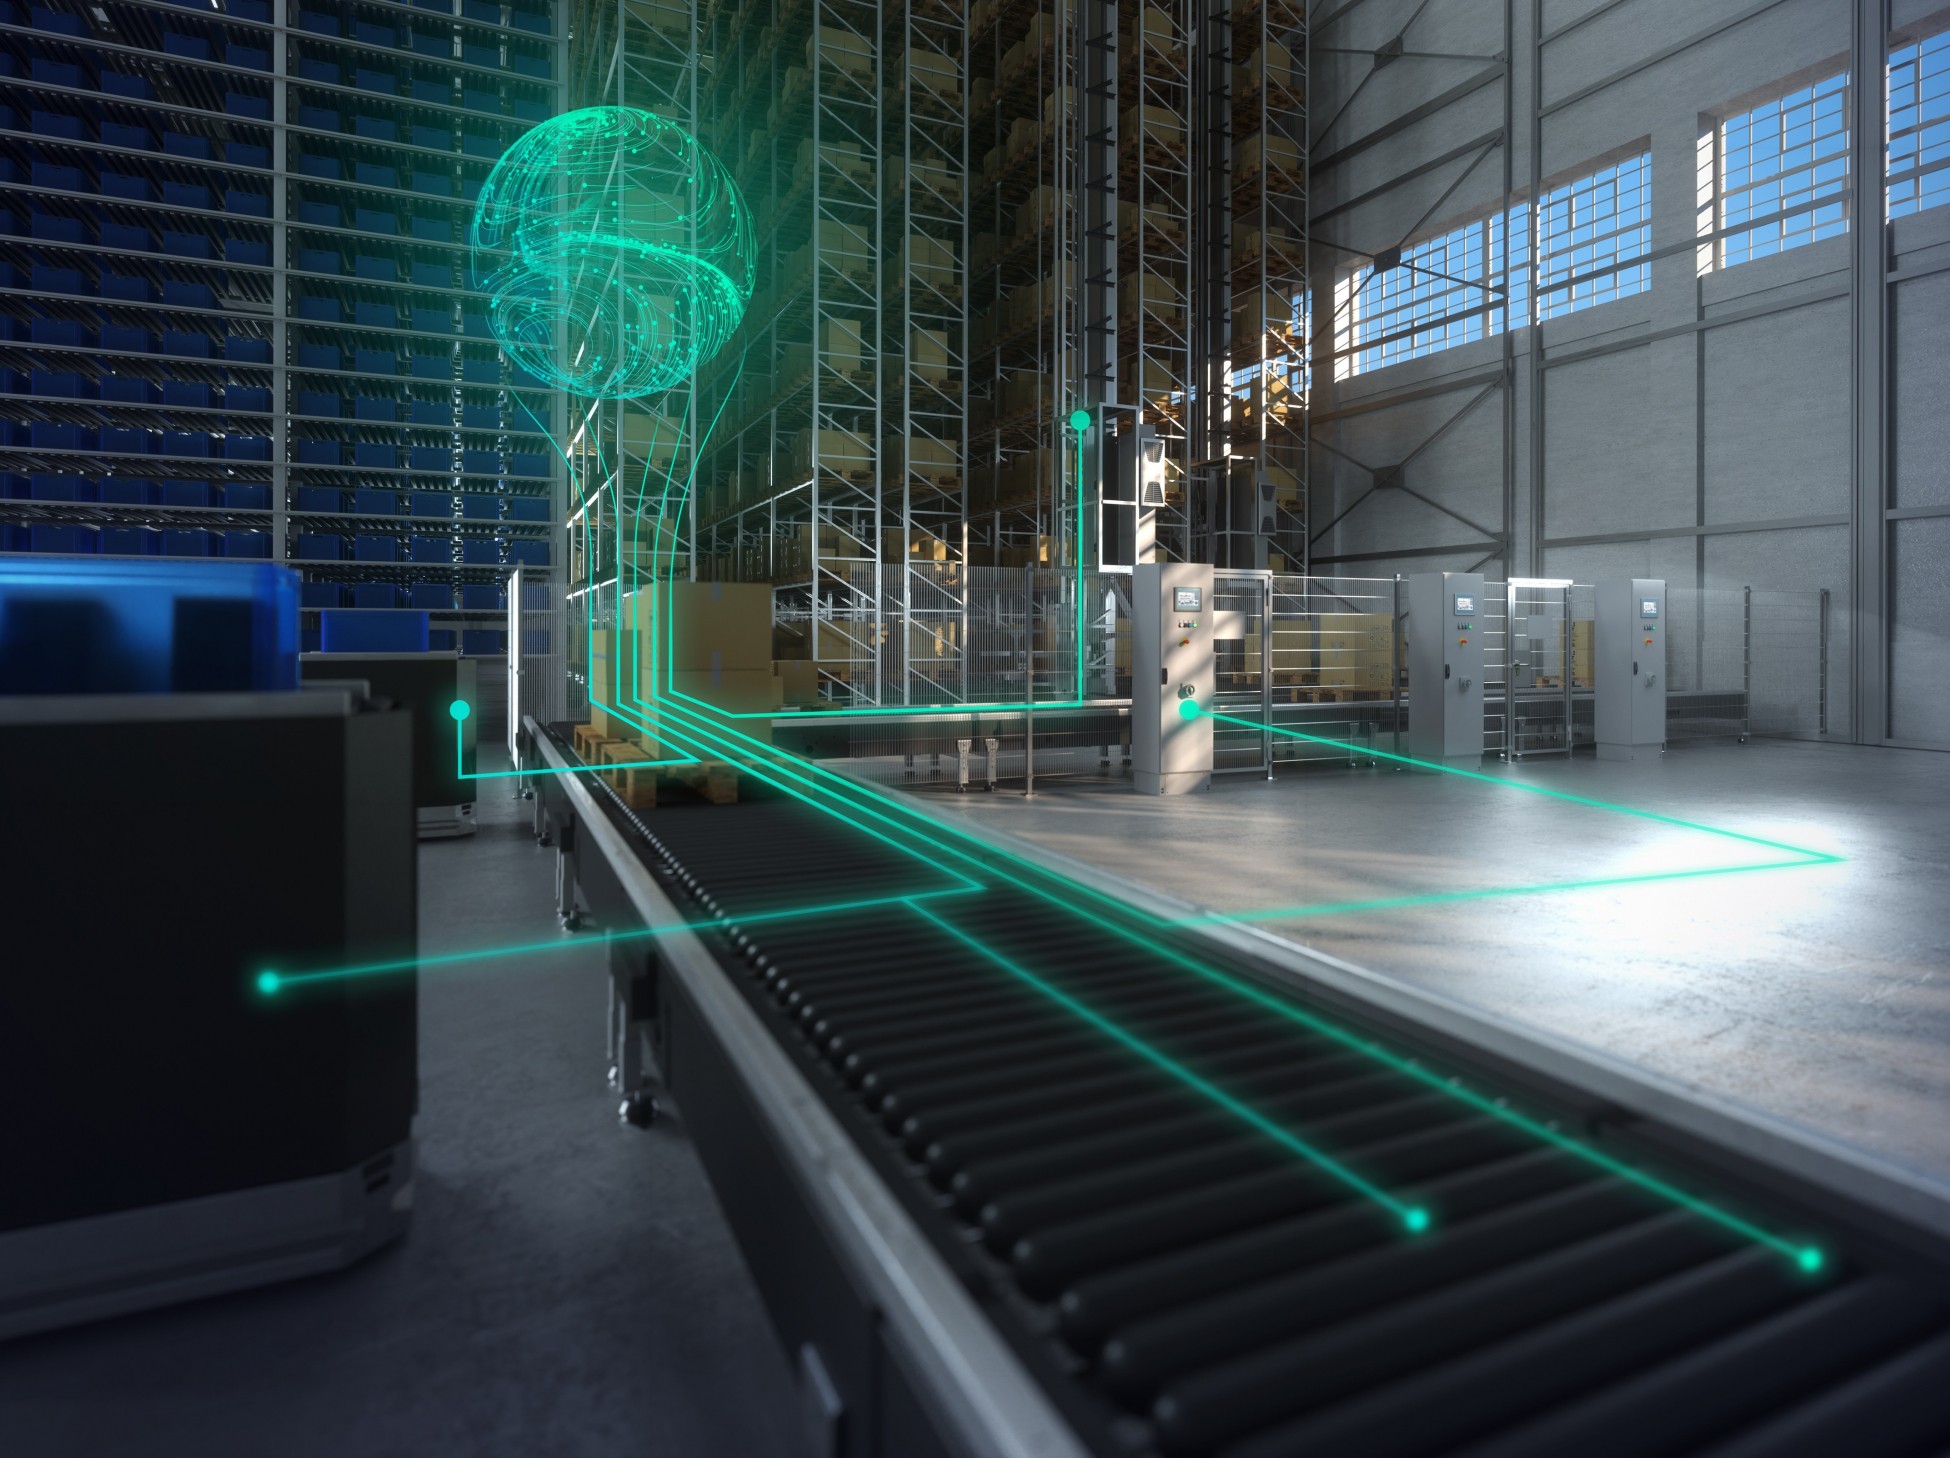 Siemens: Ευελιξία, Ταχύτητα και Βιωσιμότητα με Ολοκληρωμένο Ψηφιακό Δίδυμο για την Ενδο-Εφοδιαστική Αλυσίδα